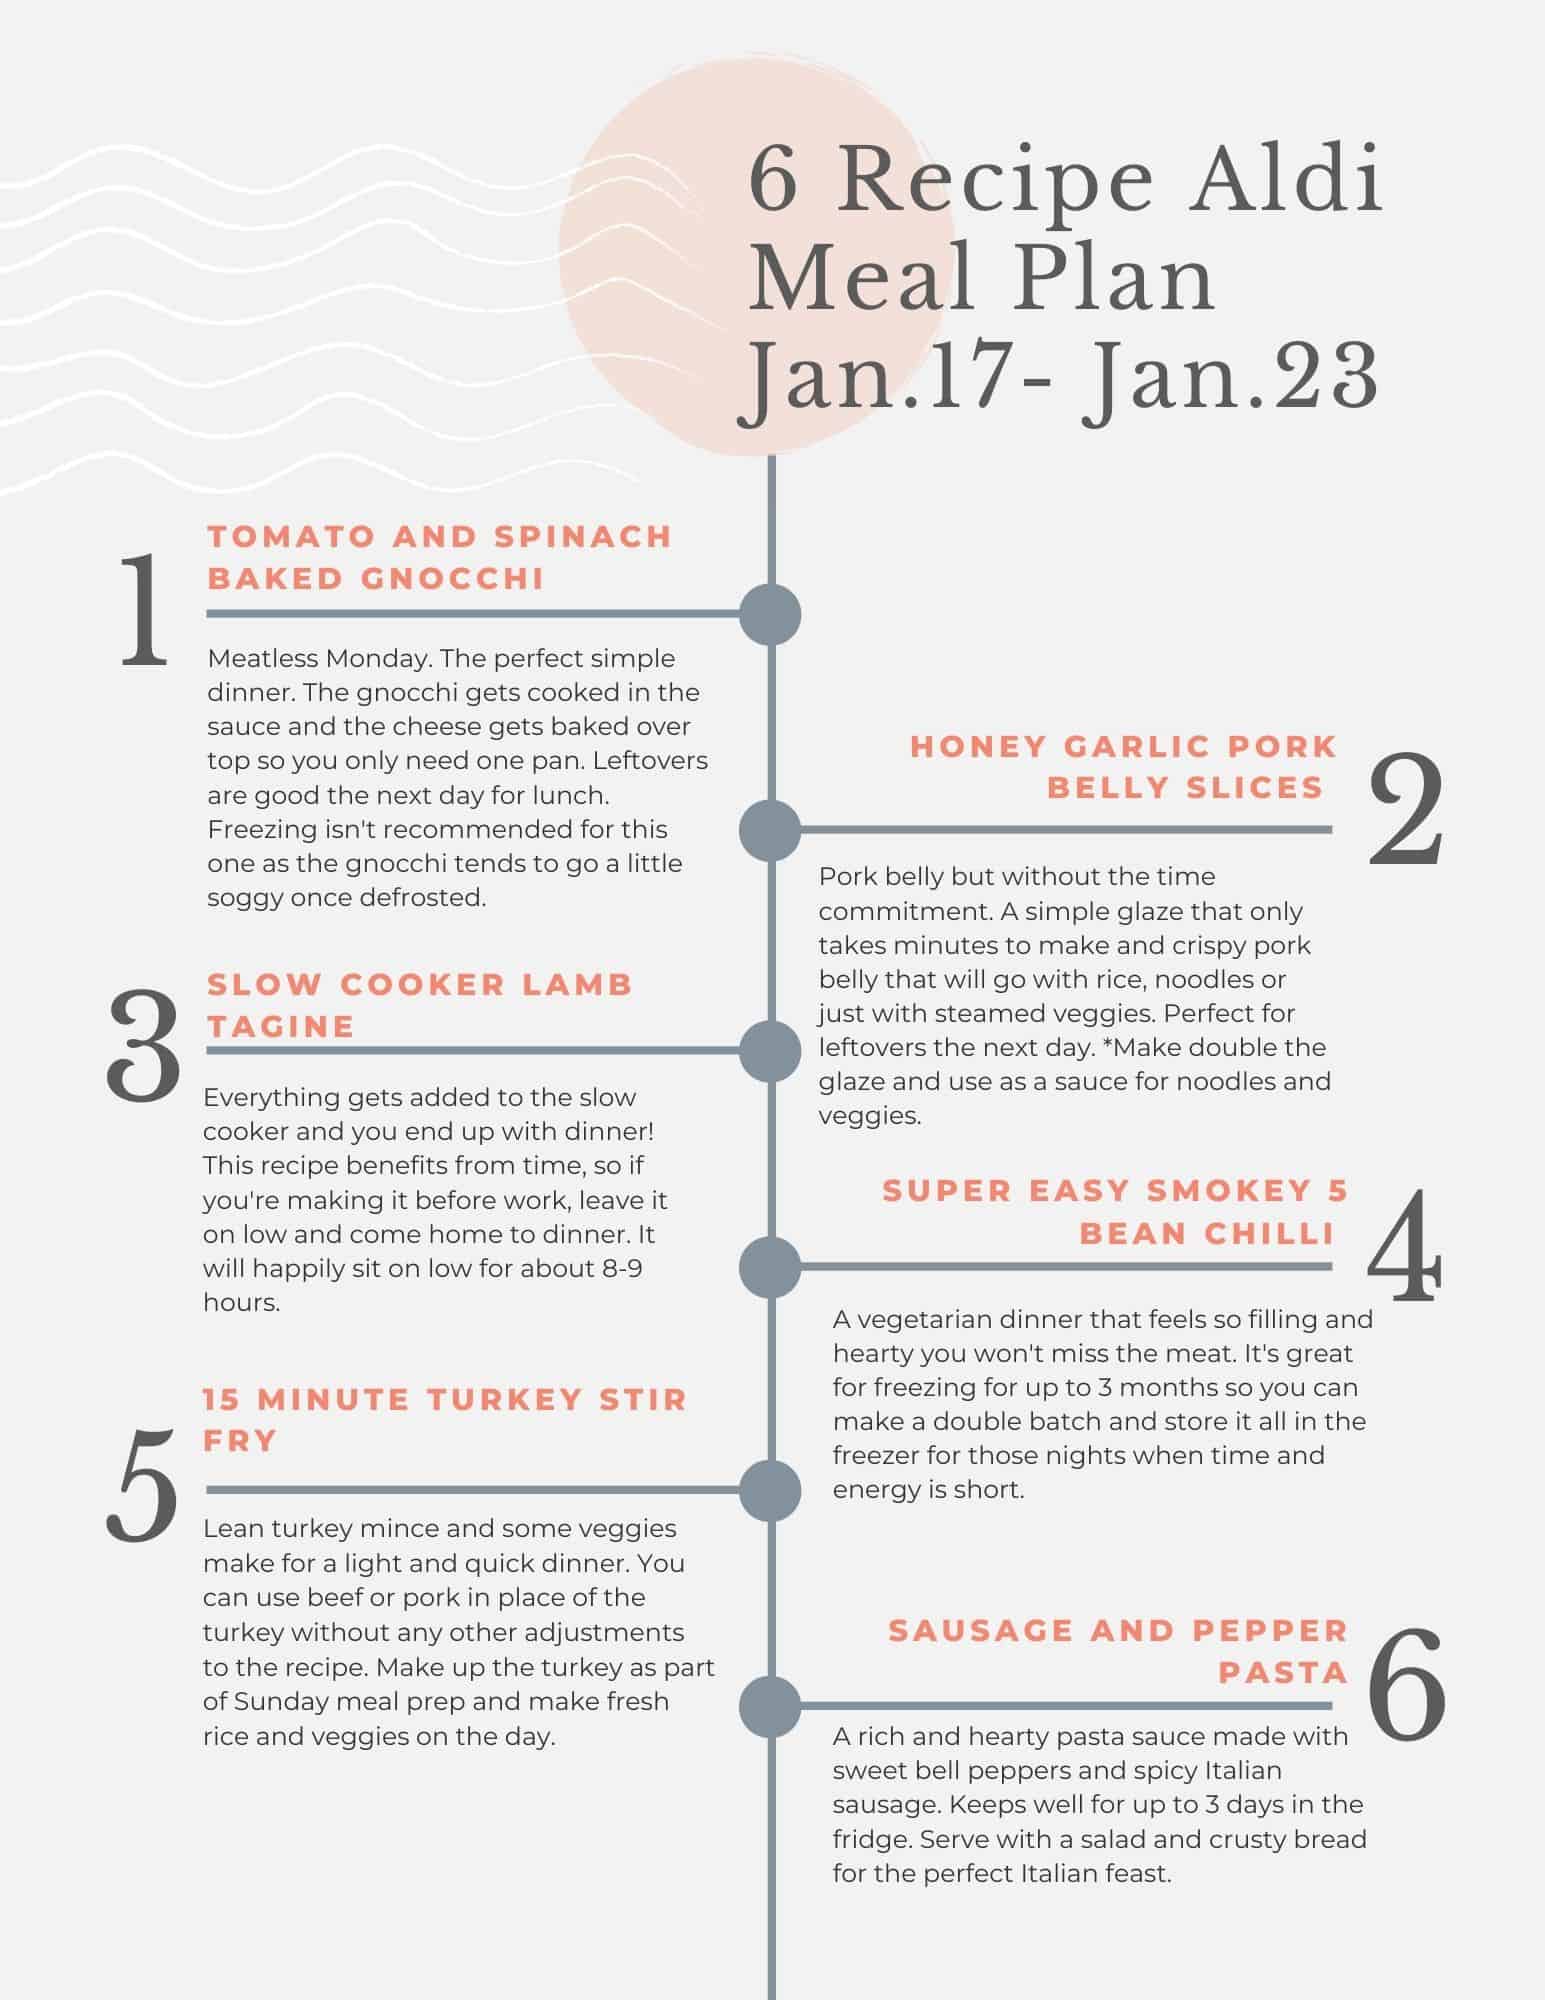 Aldi budget meal plan tip sheet